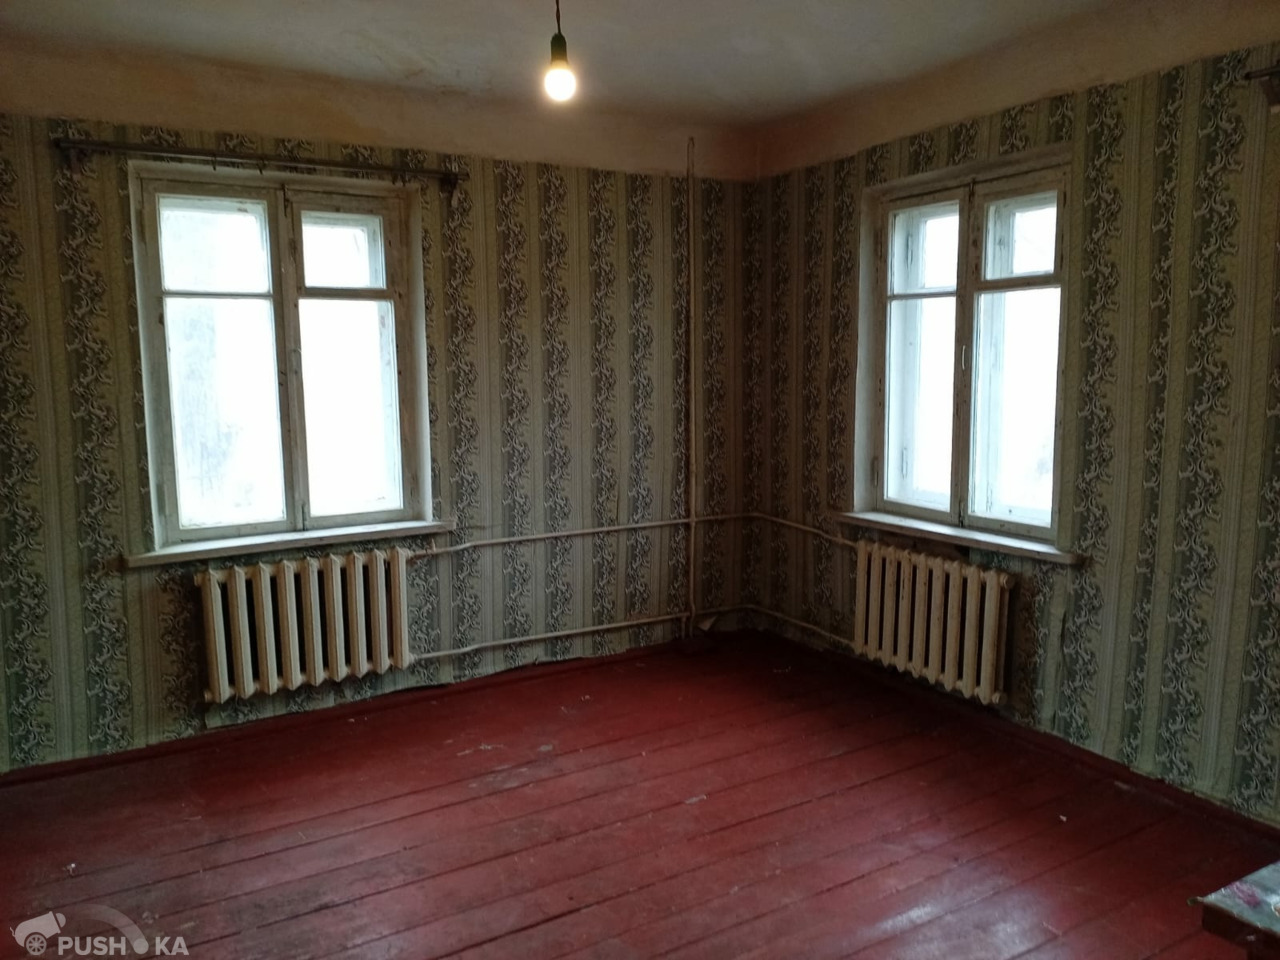 Продаётся 1-комнатная квартира 32.5 кв.м. этаж 2/2 за 1 200 000 руб 